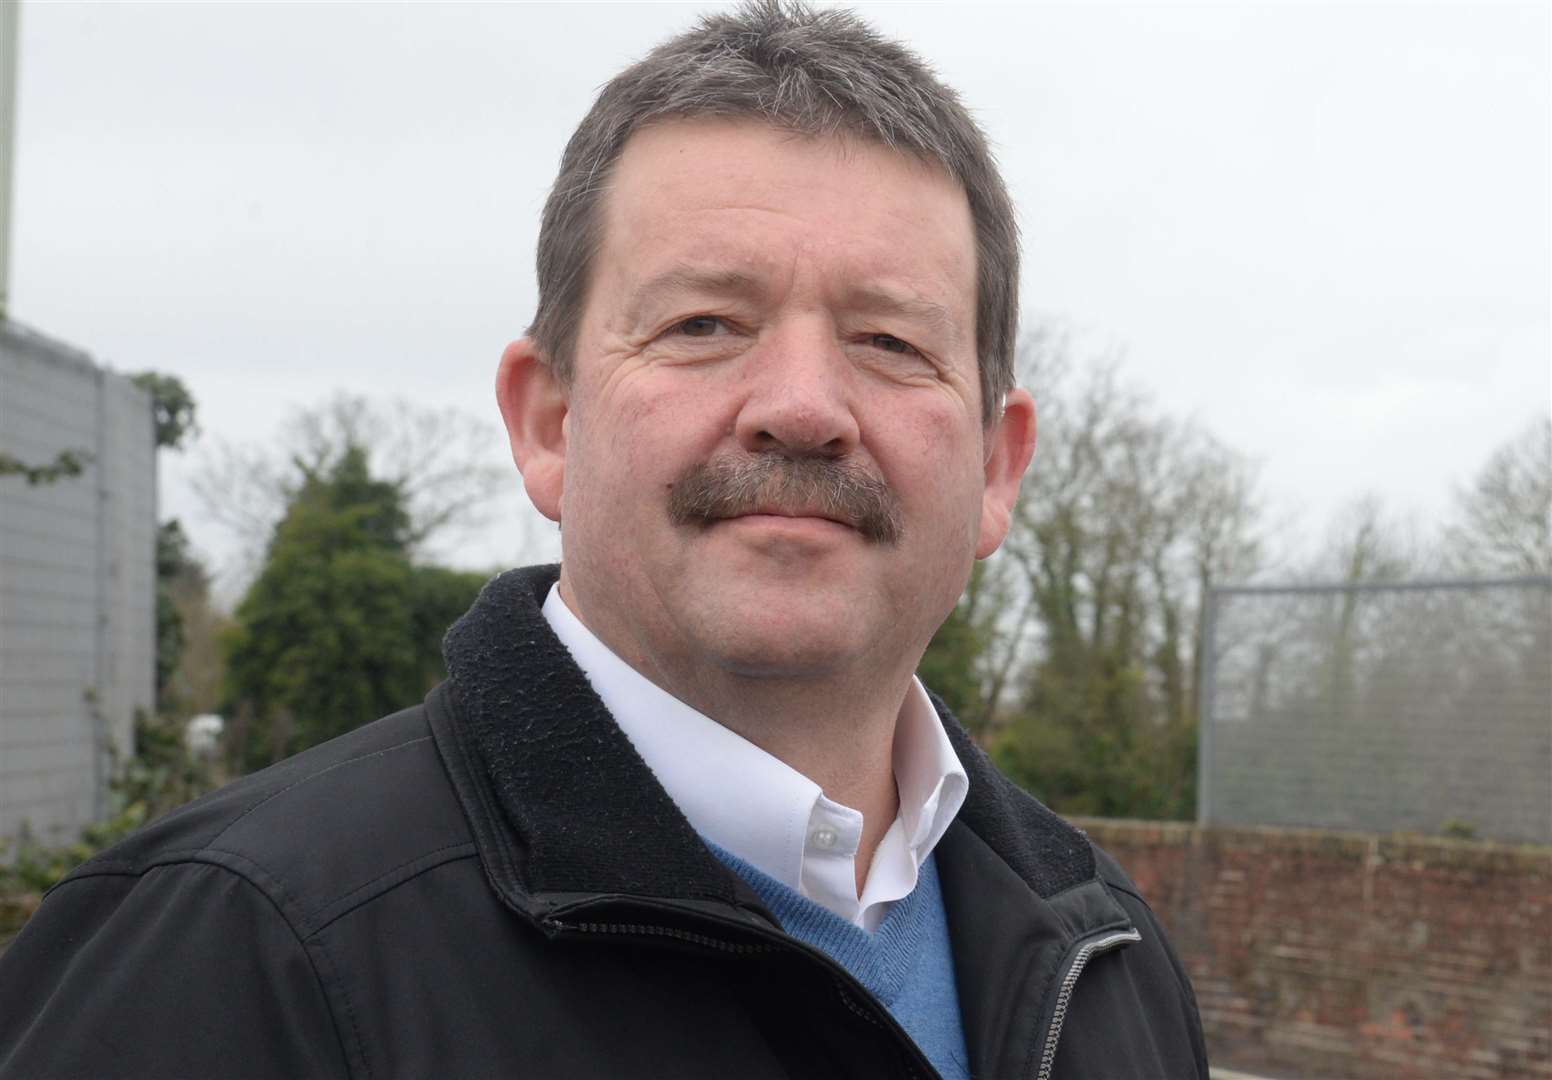 Belting councillor Ian Stockley